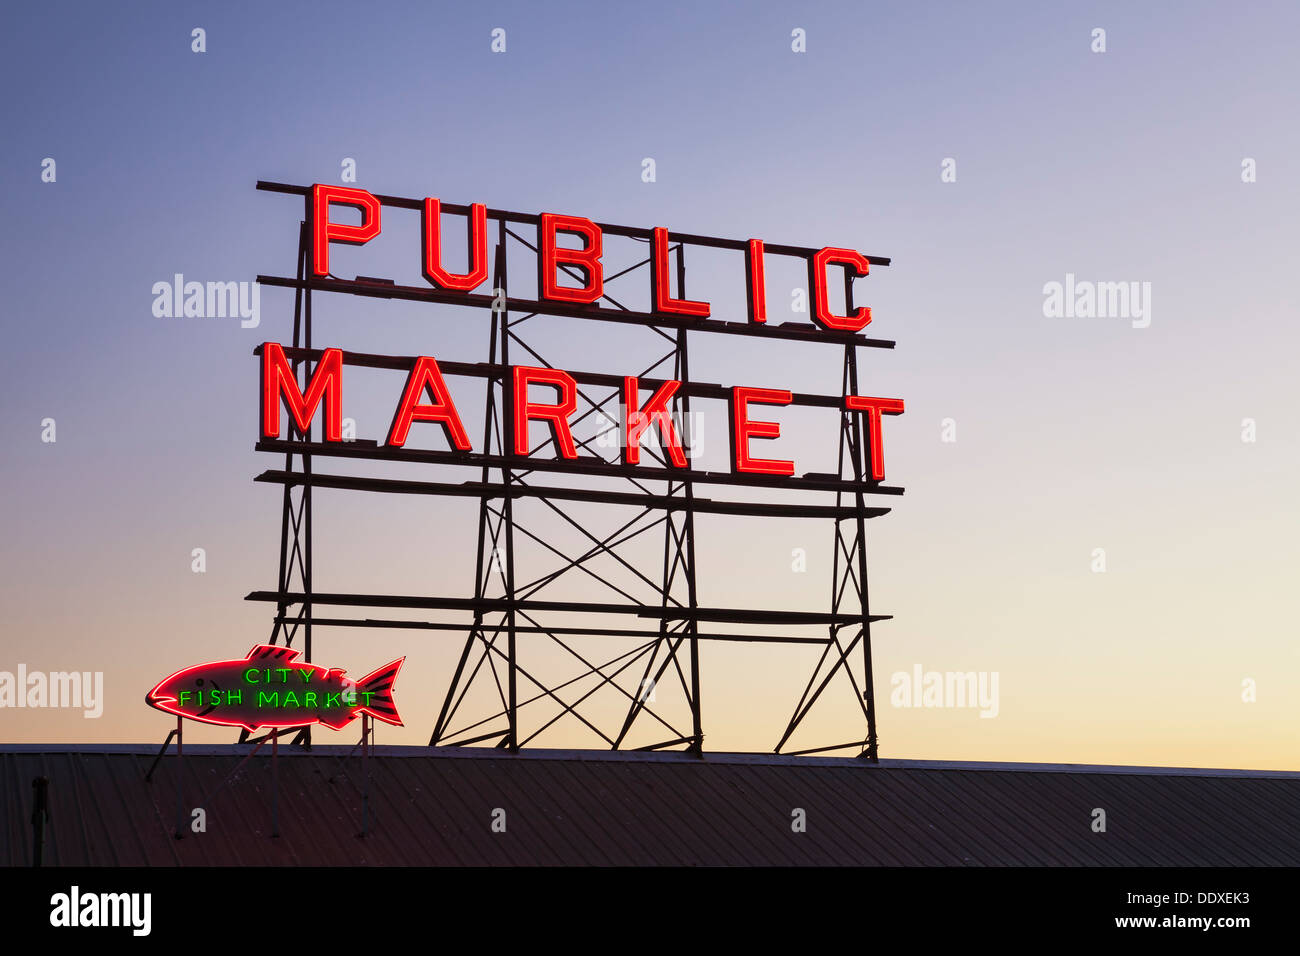 Pike Place Market Neon Signs at dusk, Seattle, Washington Stock Photo